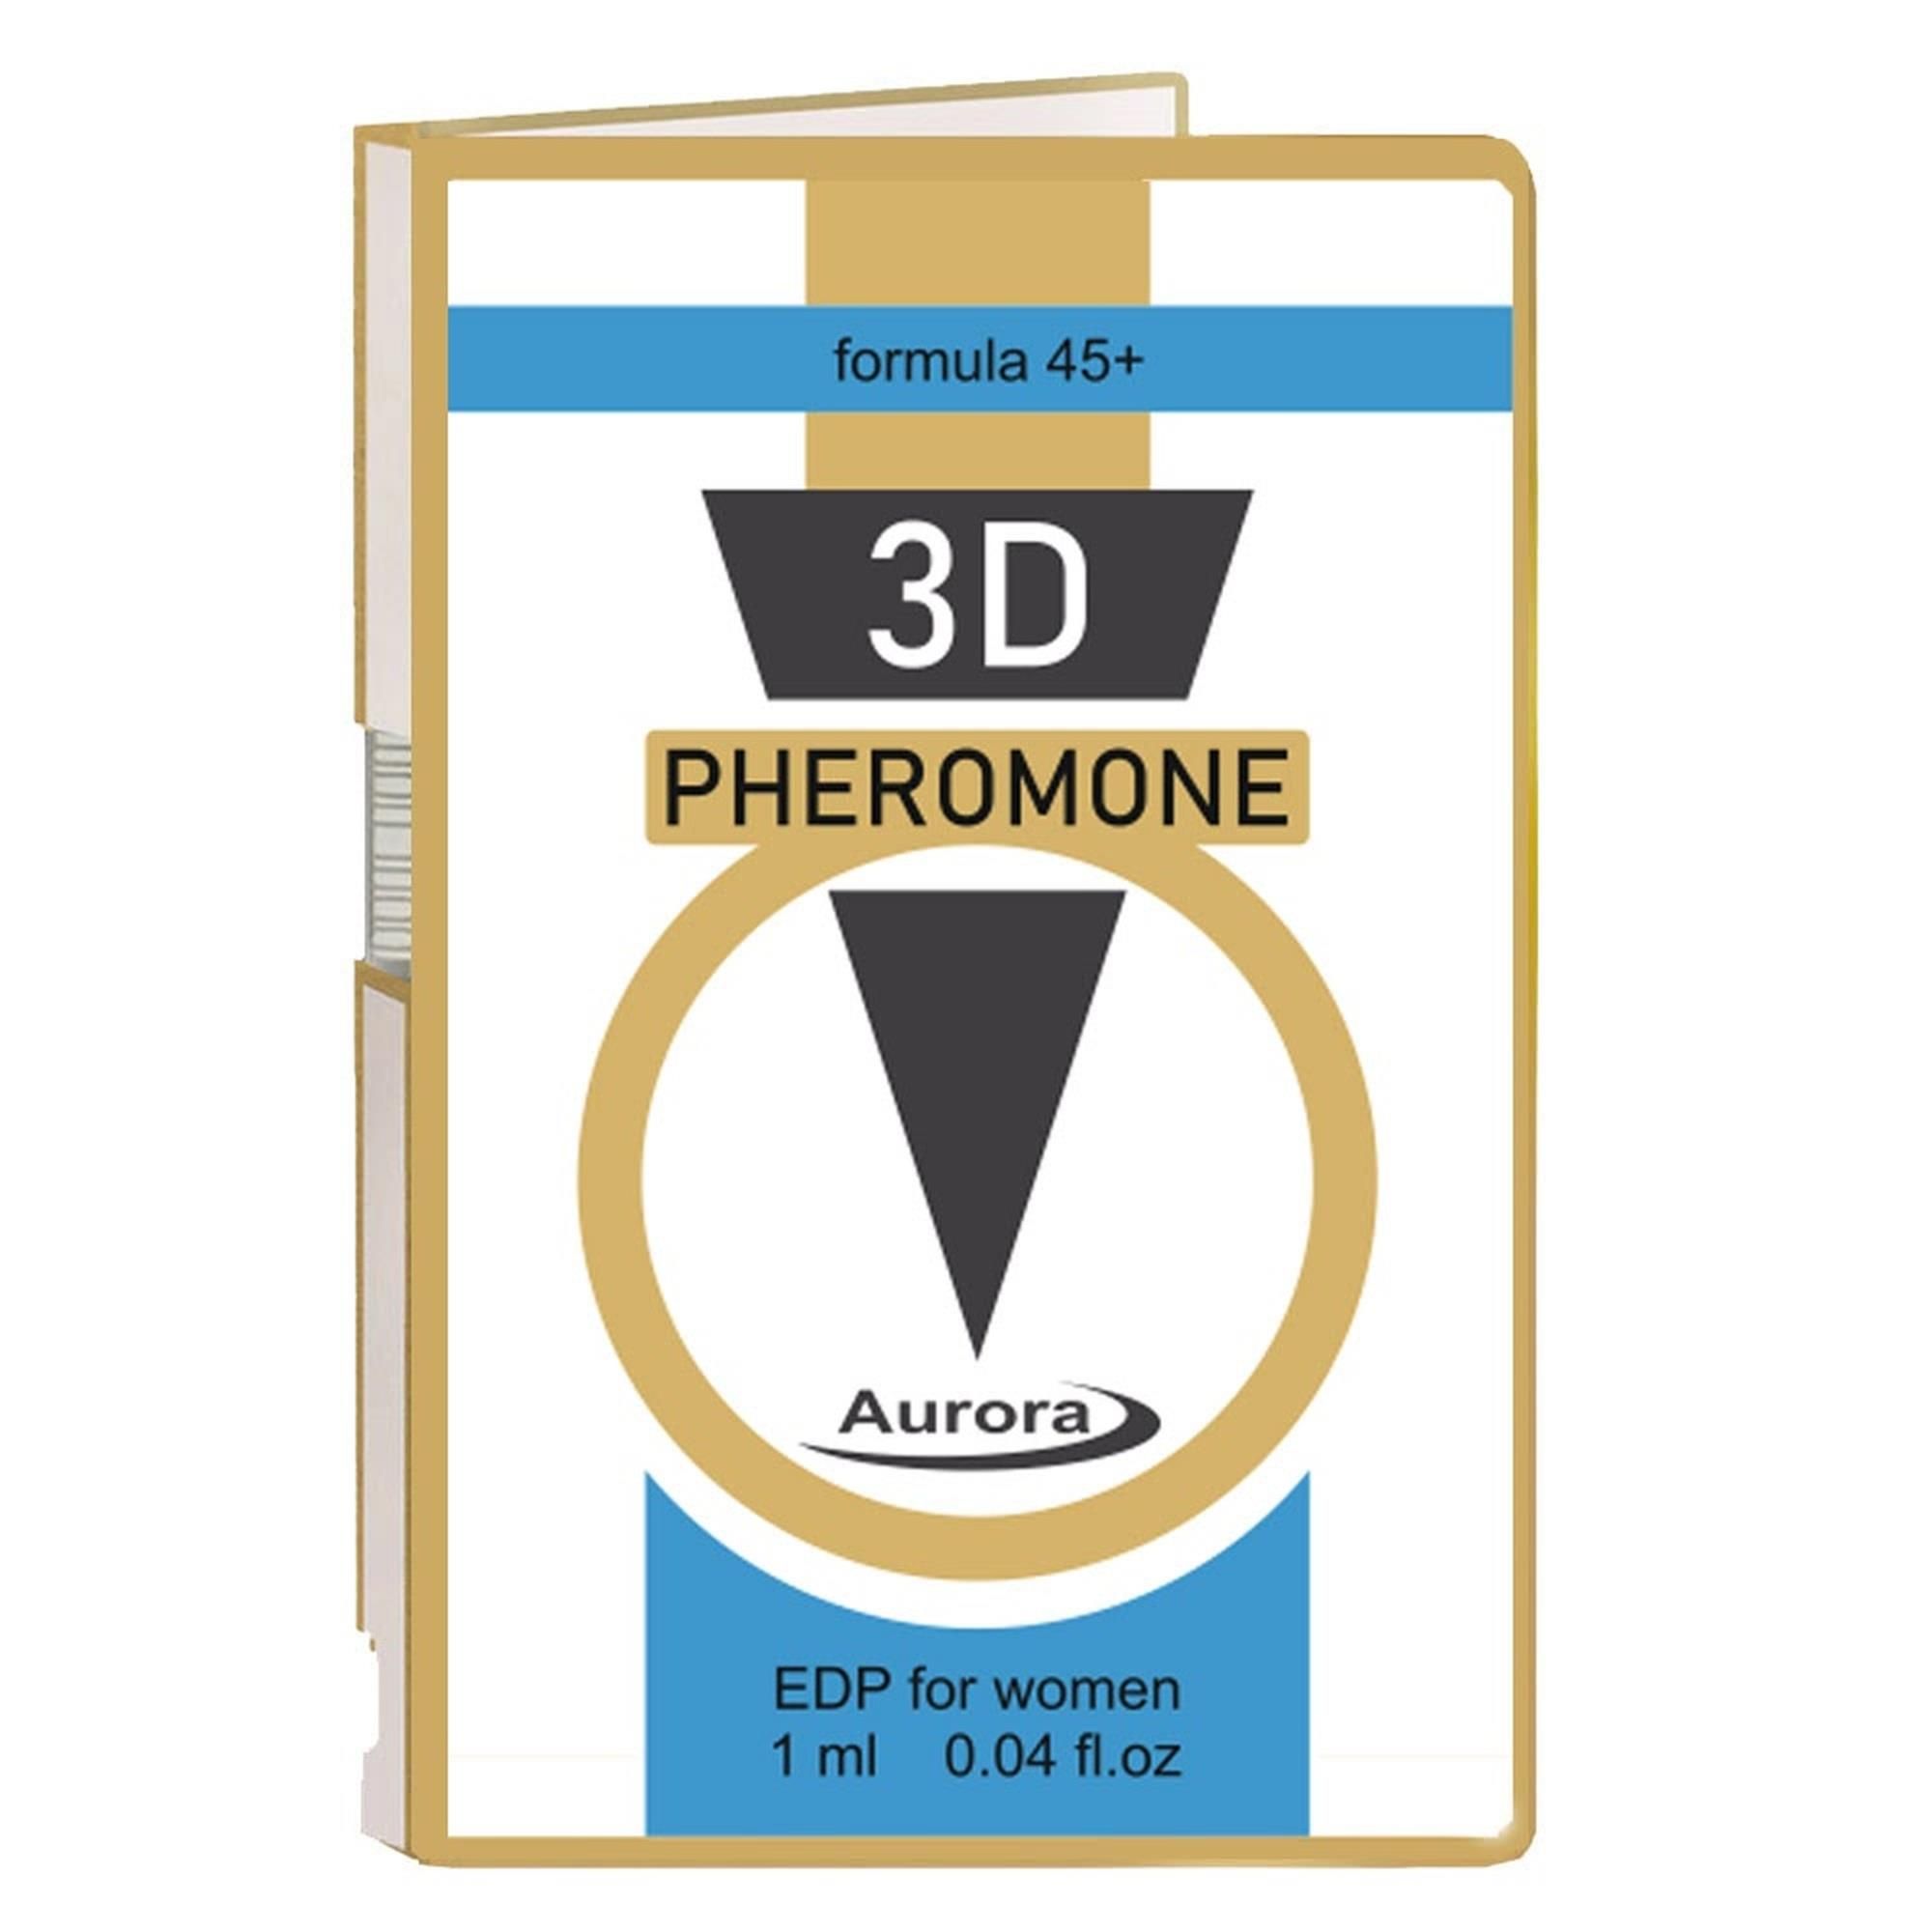 Feromony - 3D Pheromone for women 45 plus 1ml kup z olx!